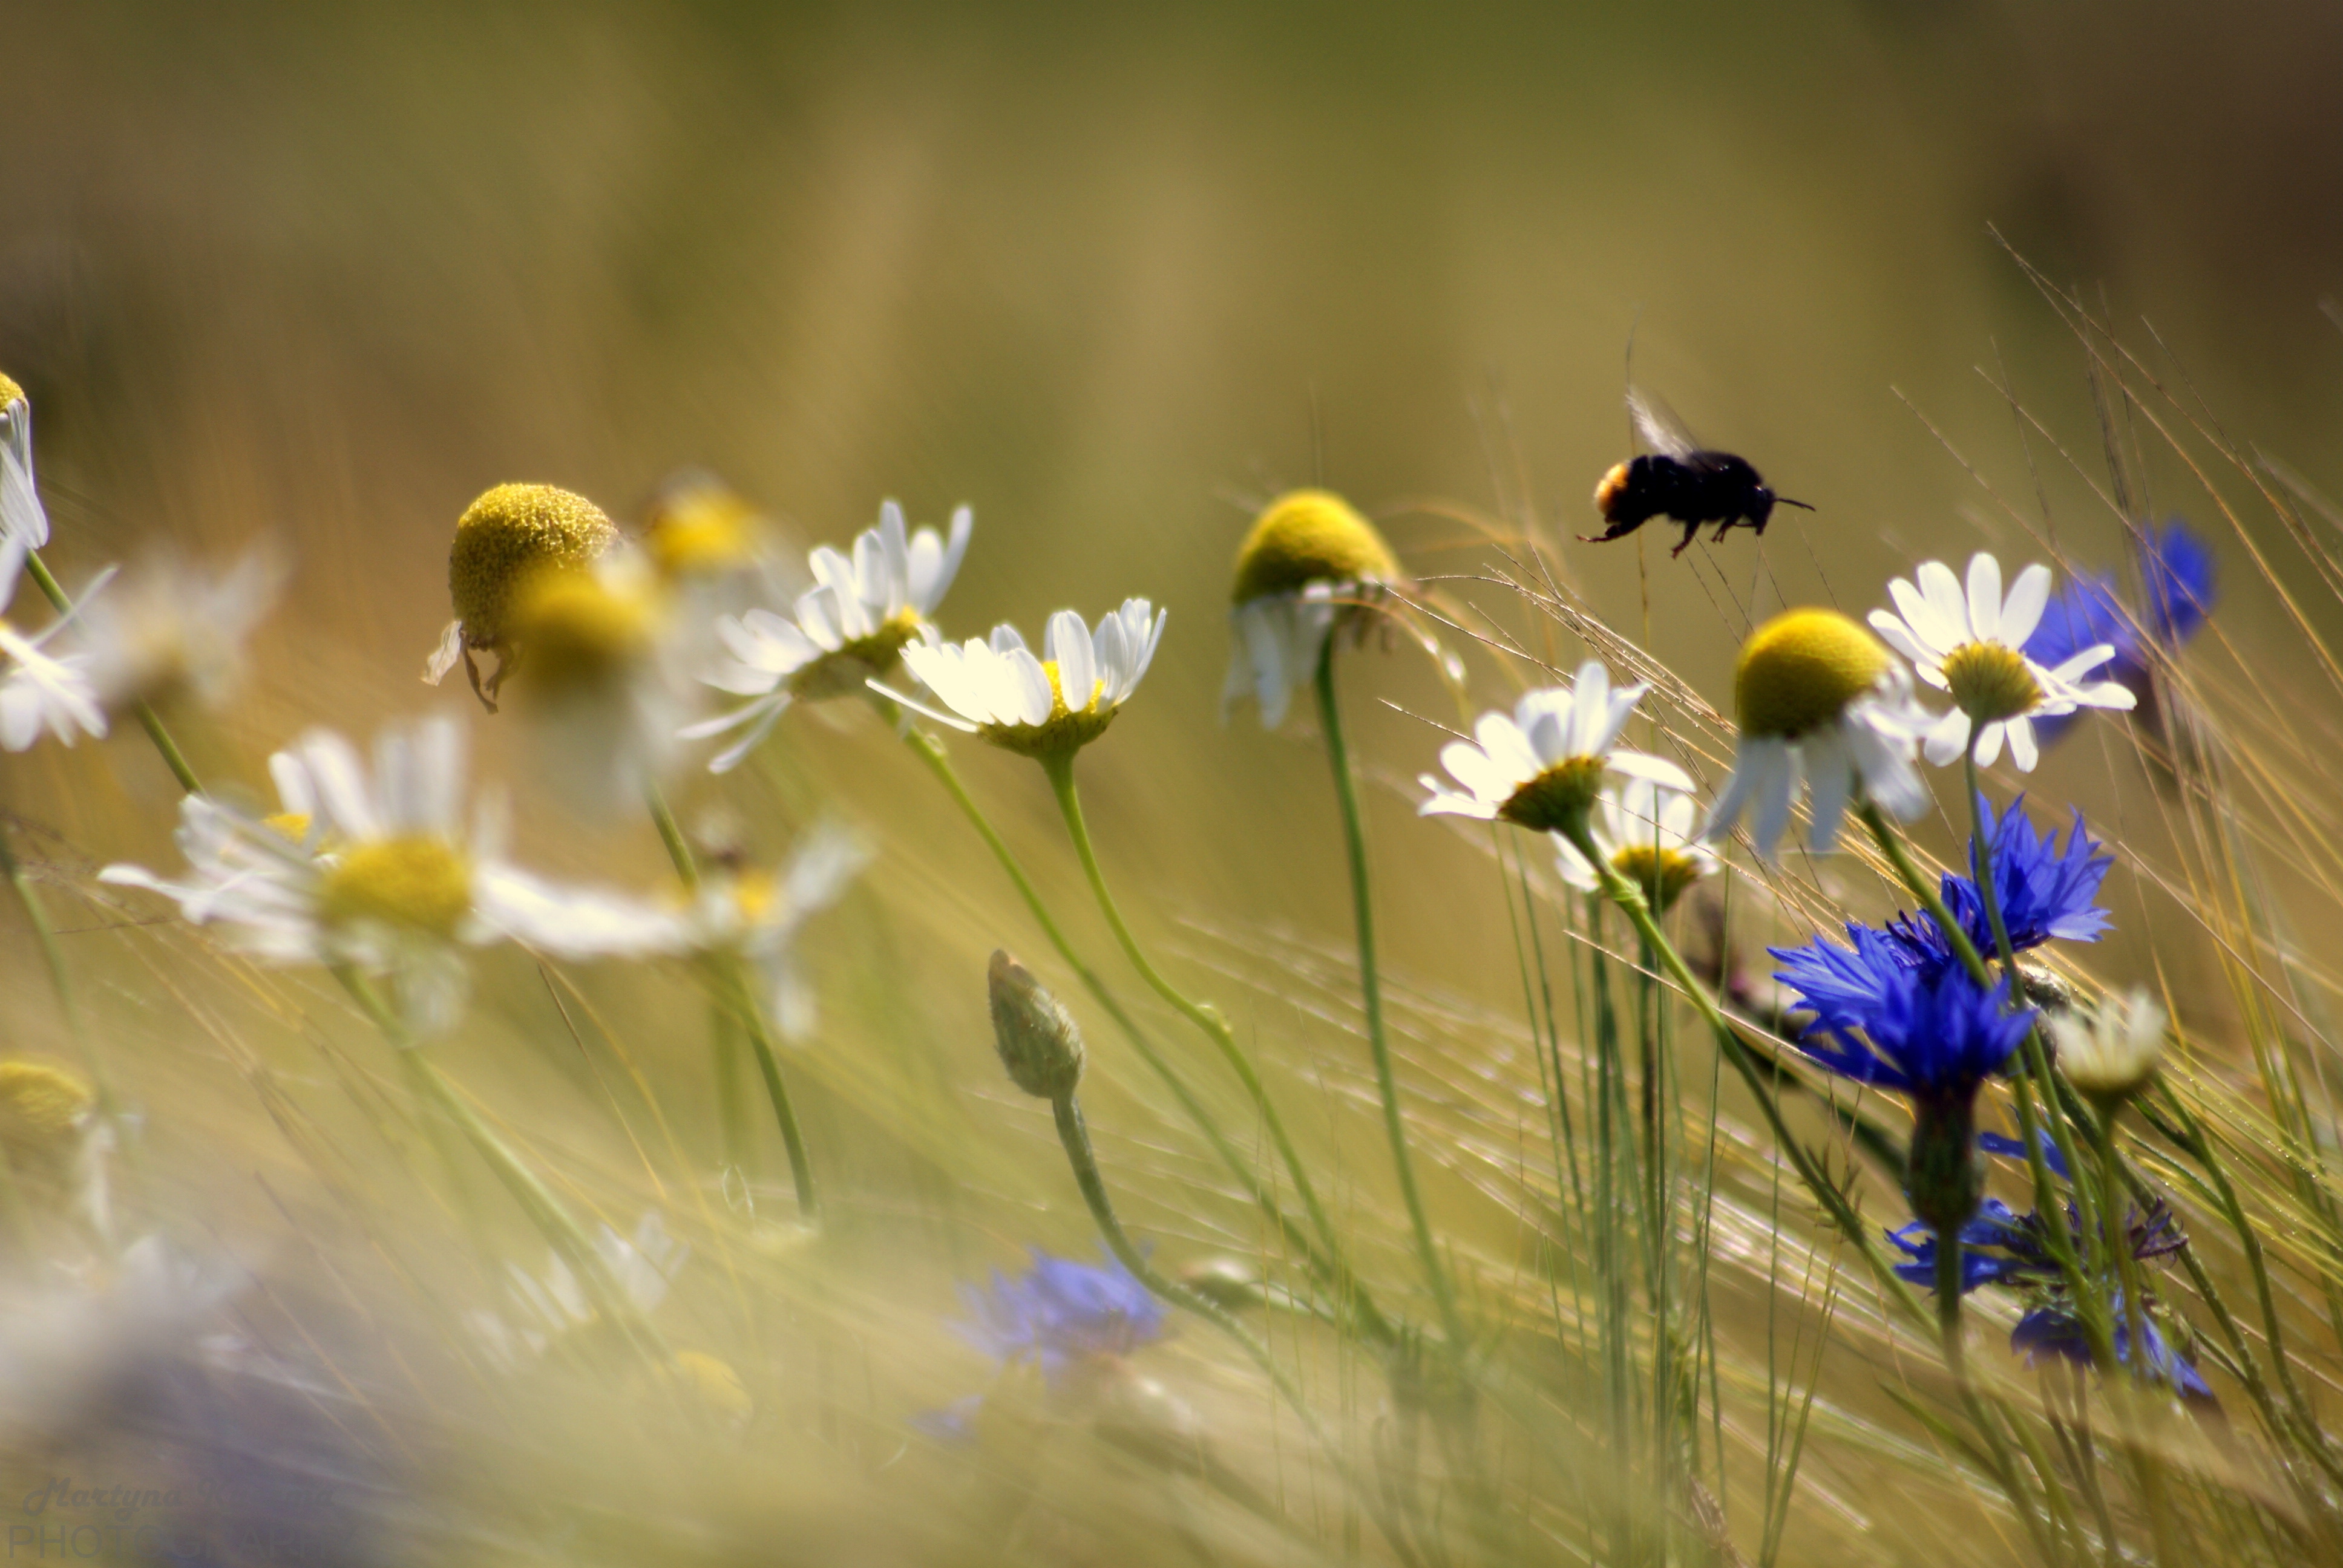 399853 descargar imagen tierra/naturaleza, margarita, abejorro, flor, insecto, naturaleza, flor blanca, flores: fondos de pantalla y protectores de pantalla gratis